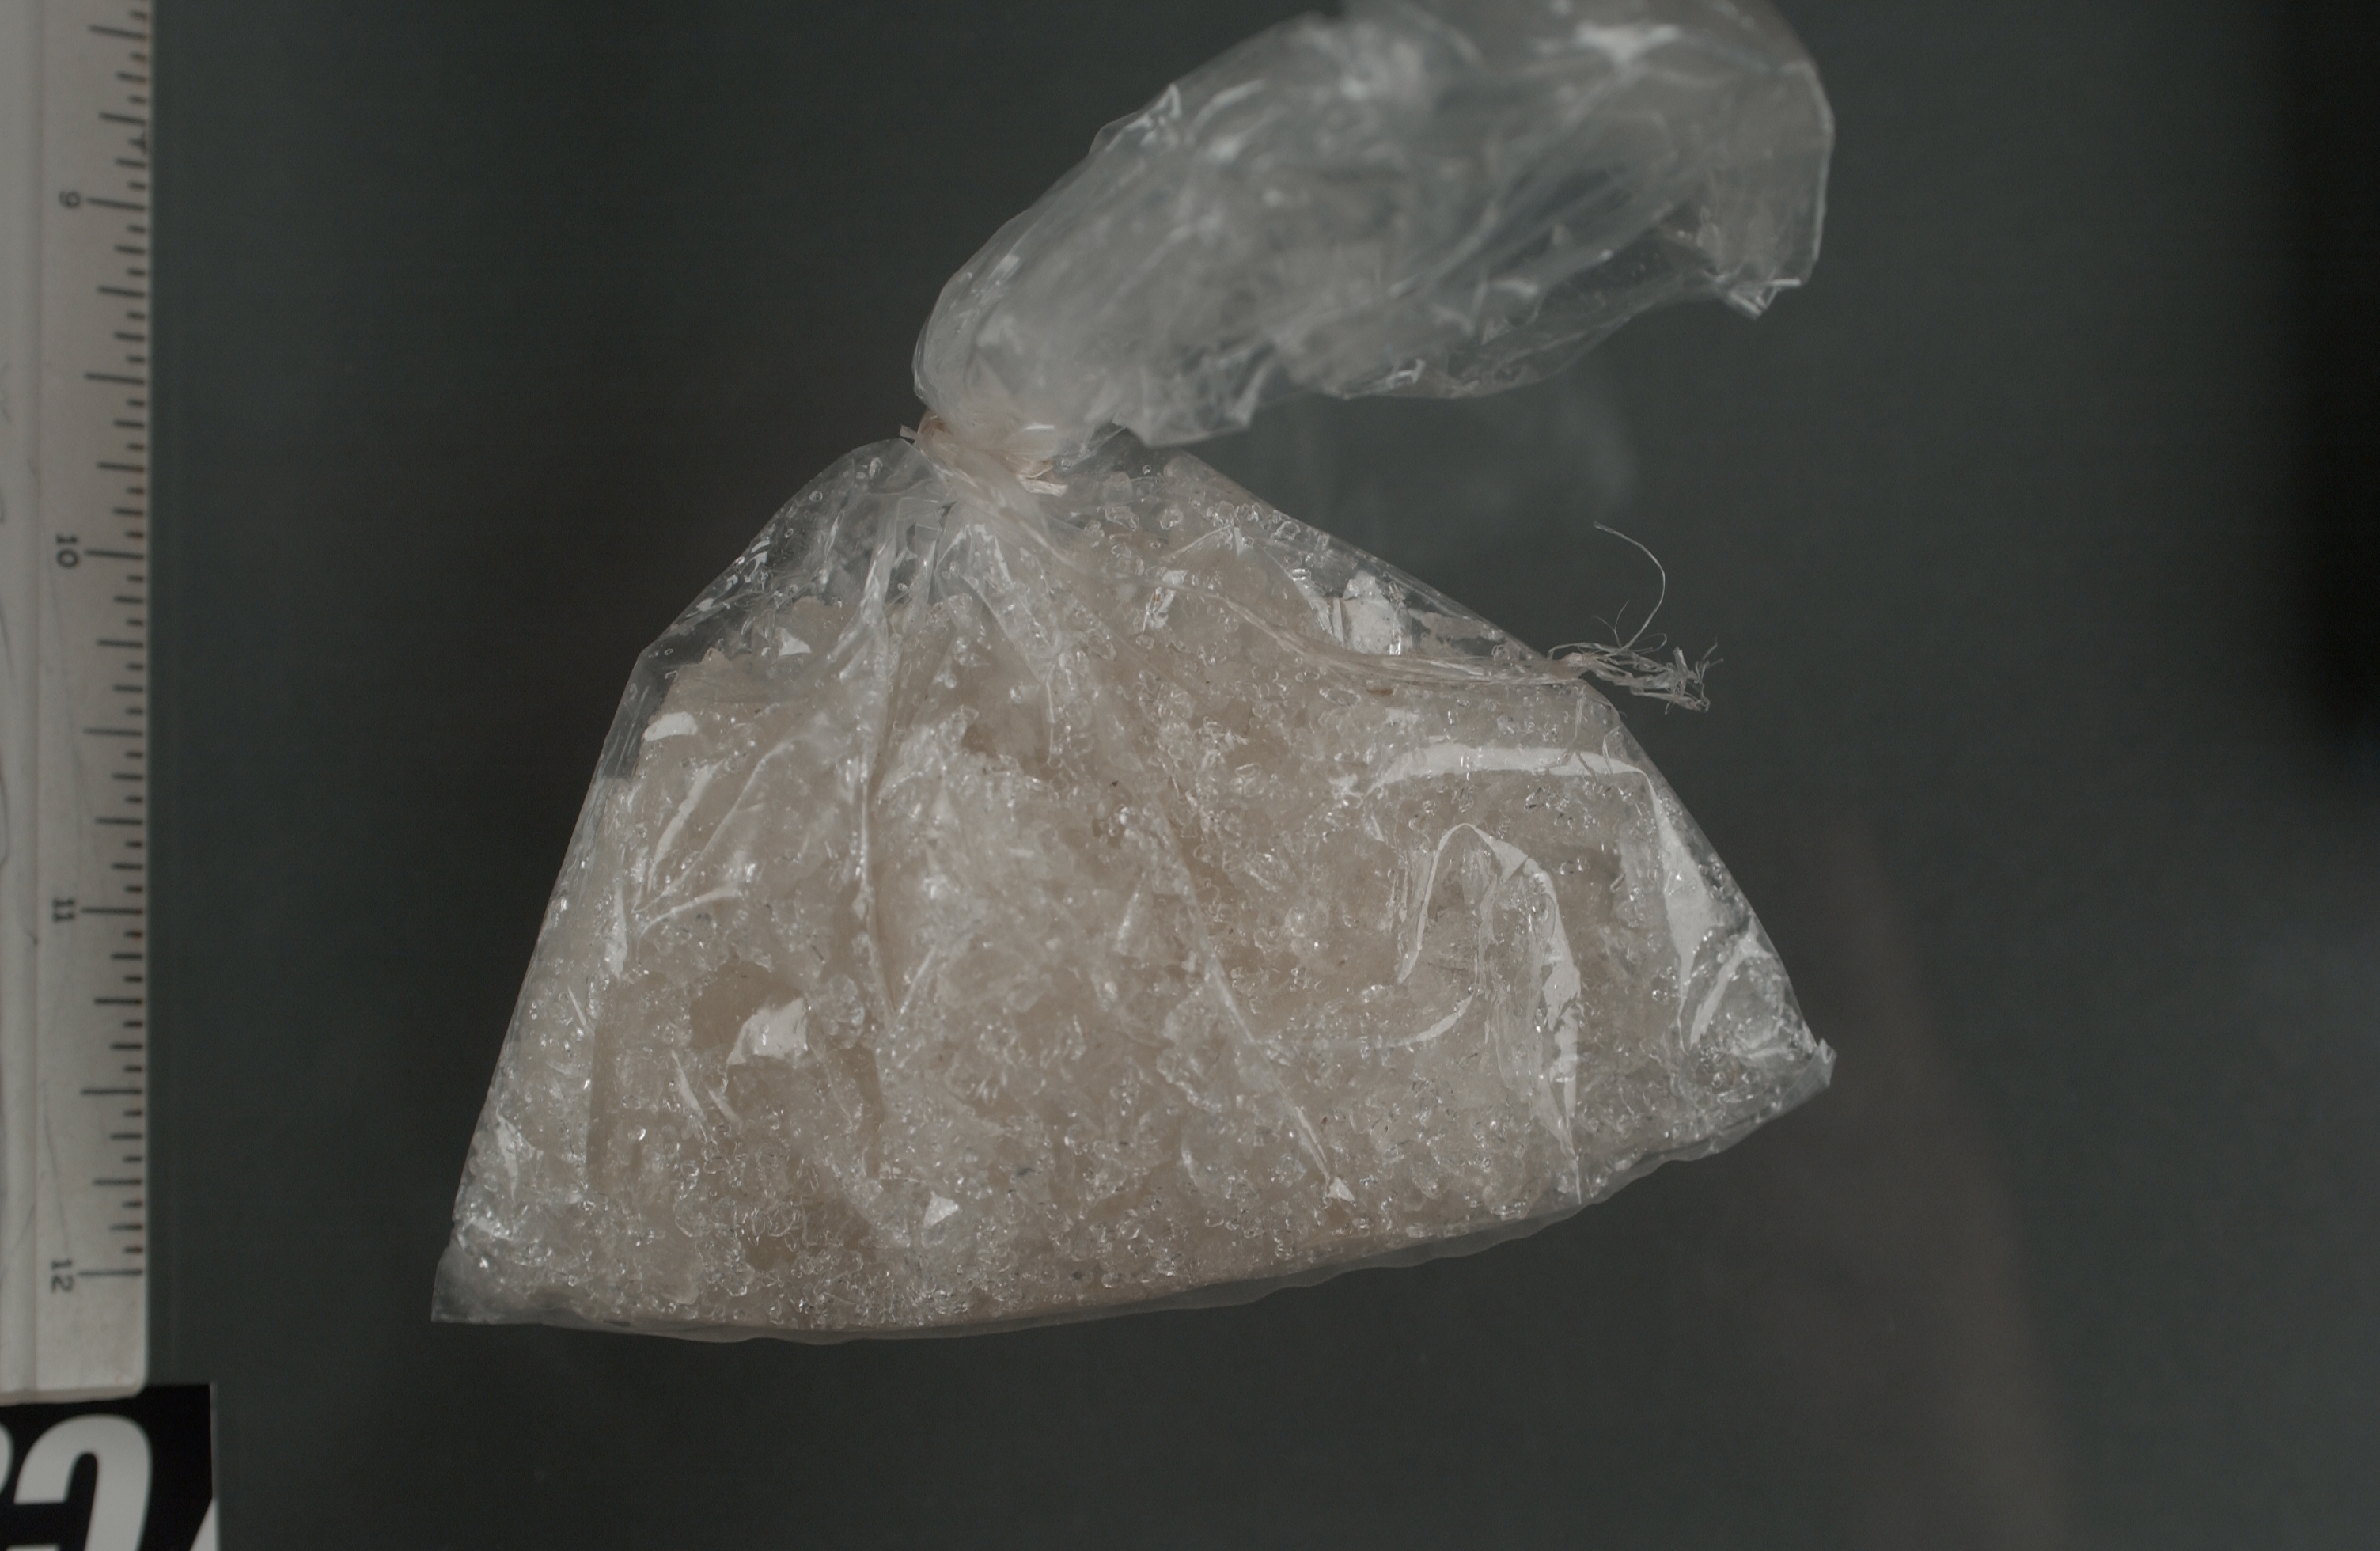 Police seized amphetamine